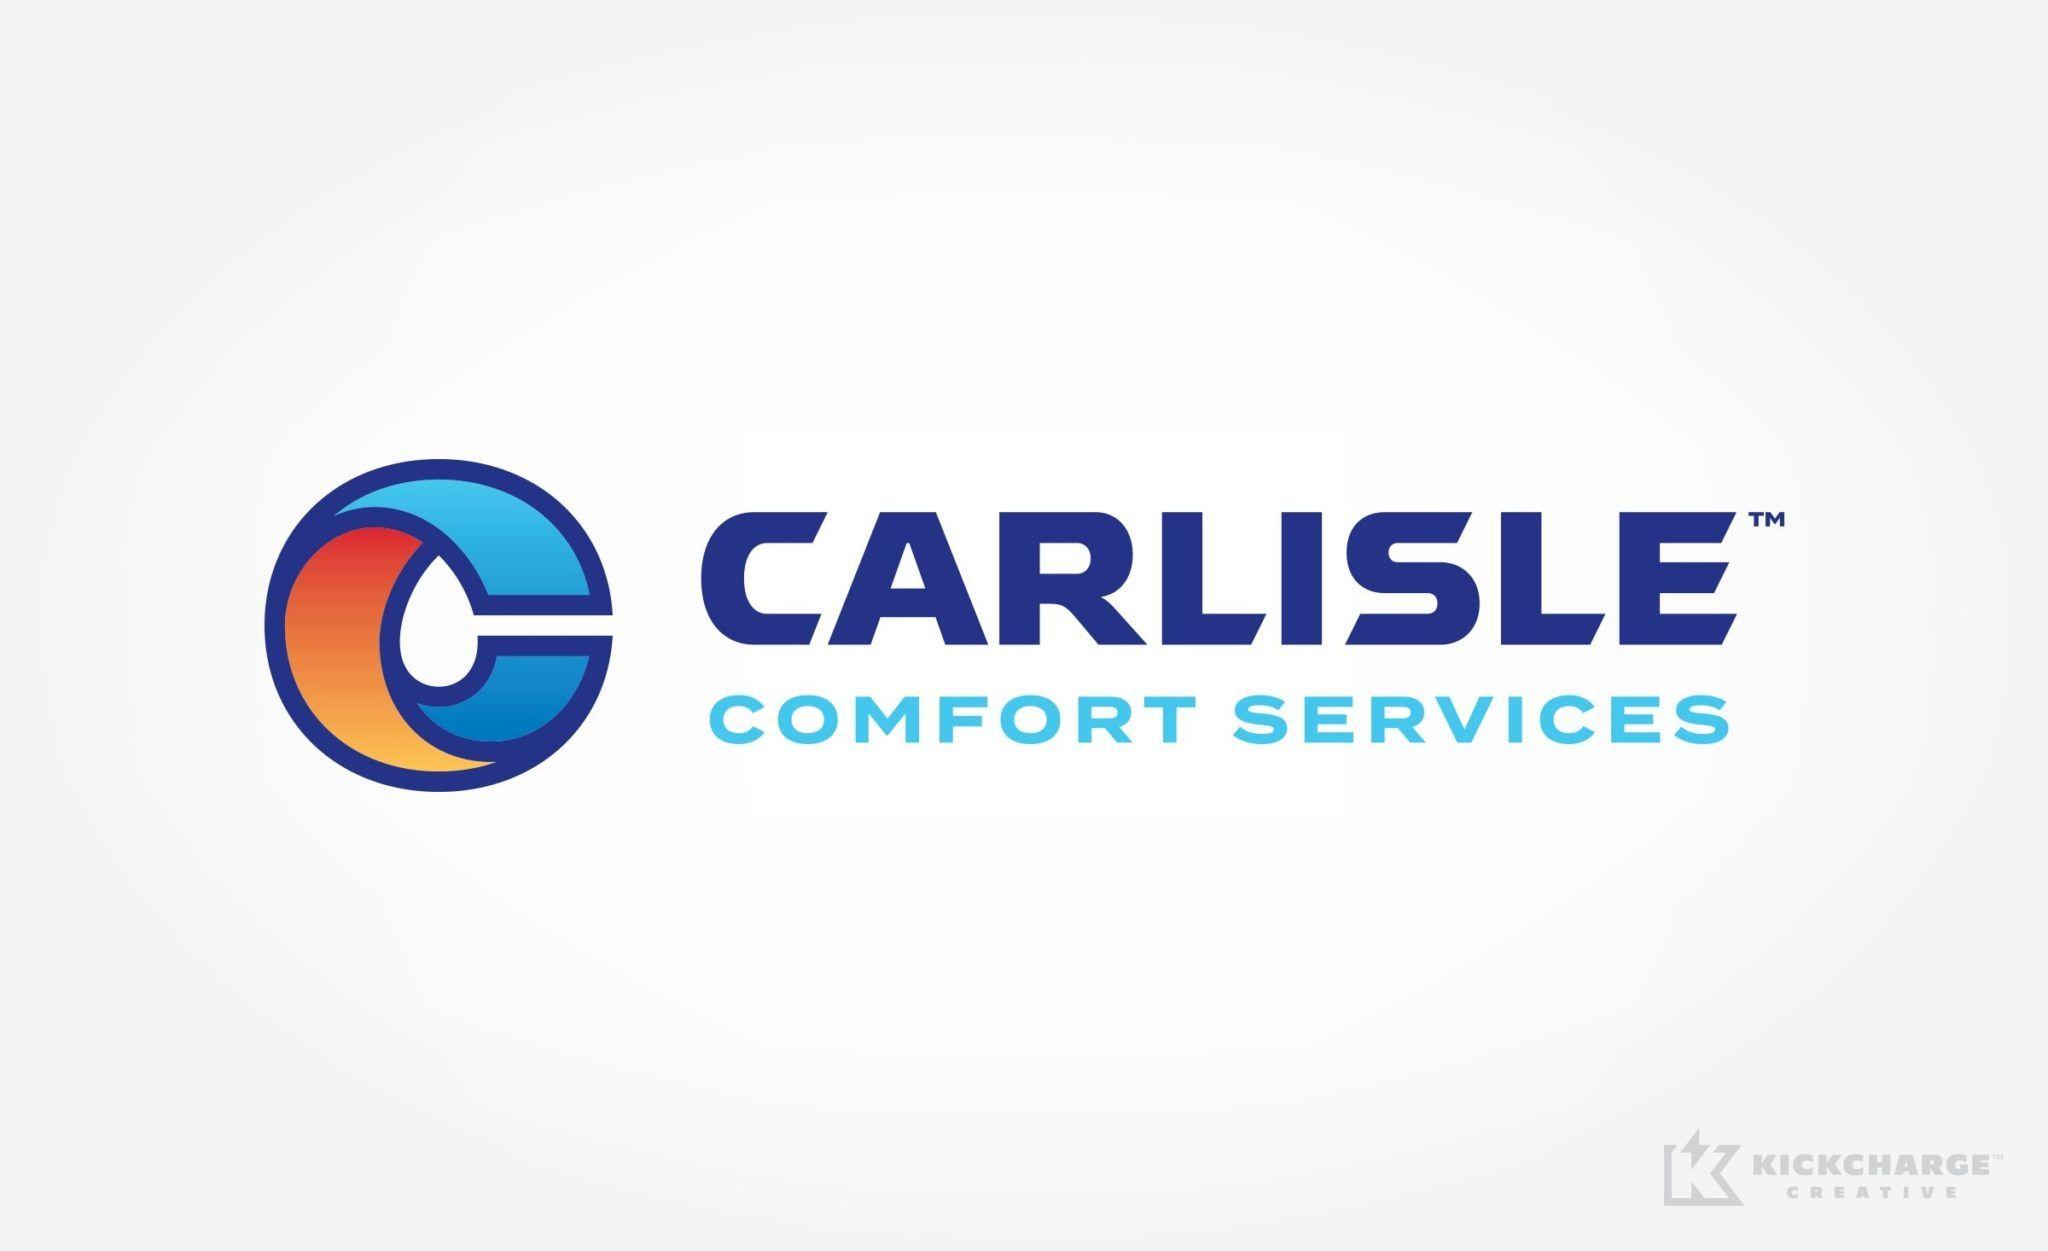 Carlisle Logo - Carlisle Comfort Services Creative. kickcharge.com